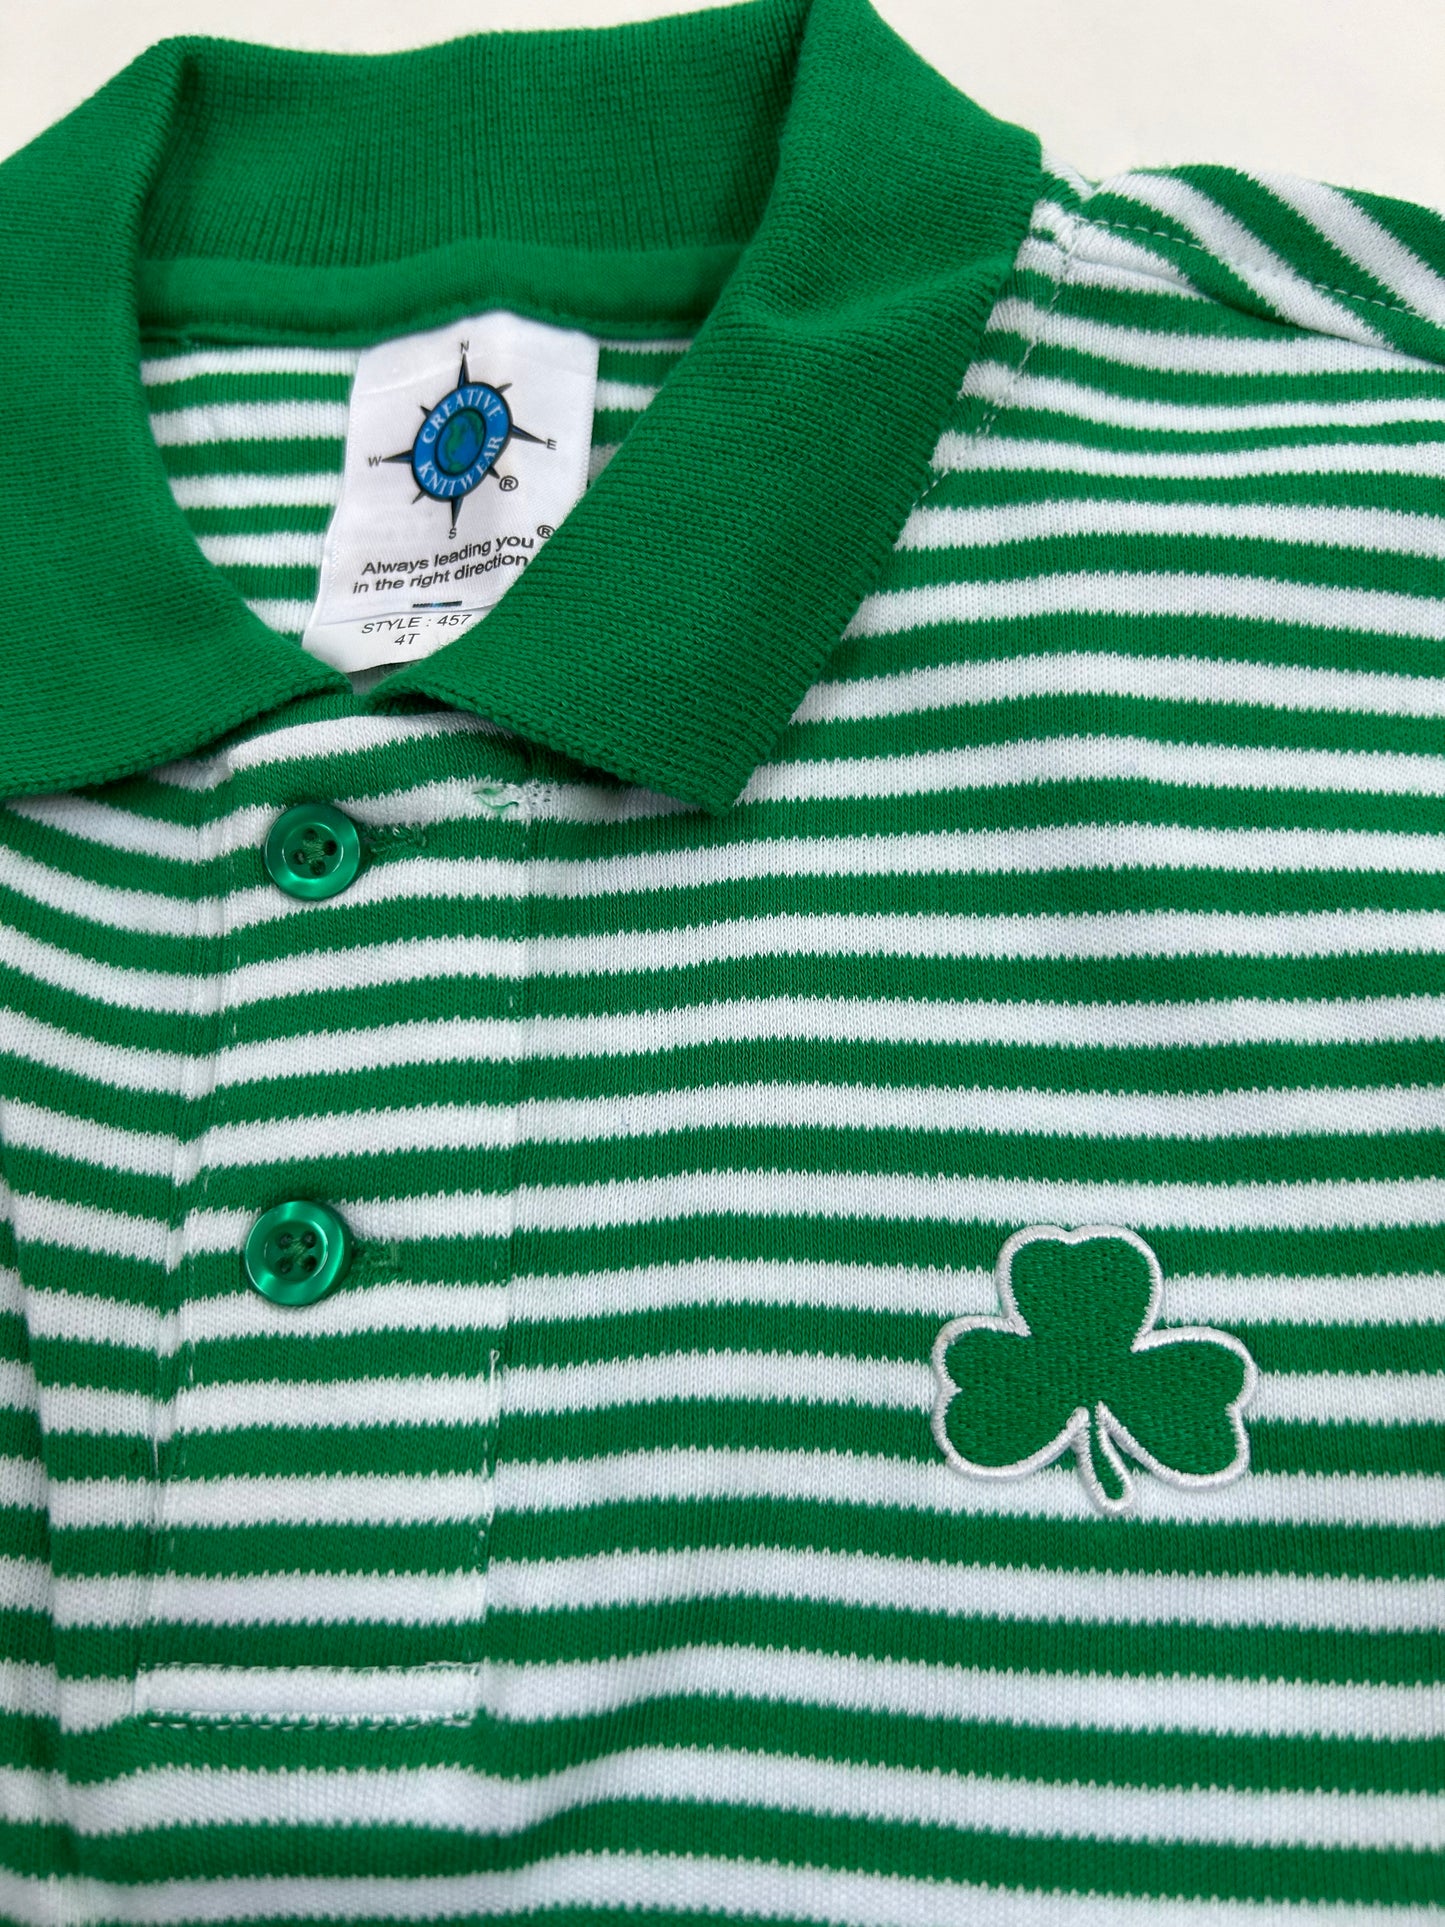 Boys 4T St Patrick's Day shirt